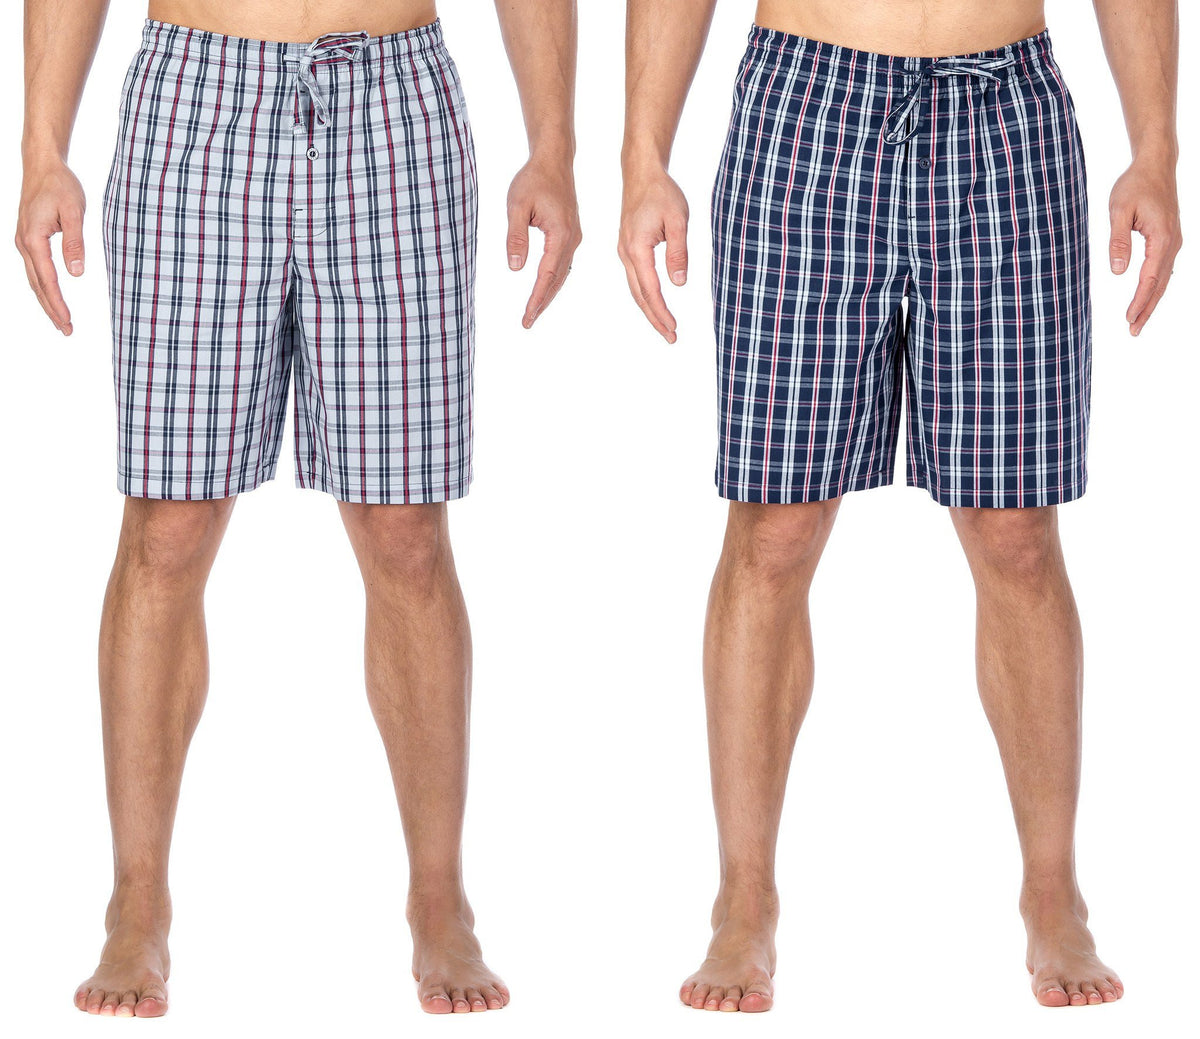 Men's Premium Cotton Sleep Shorts (2-Pack) - University Plaid